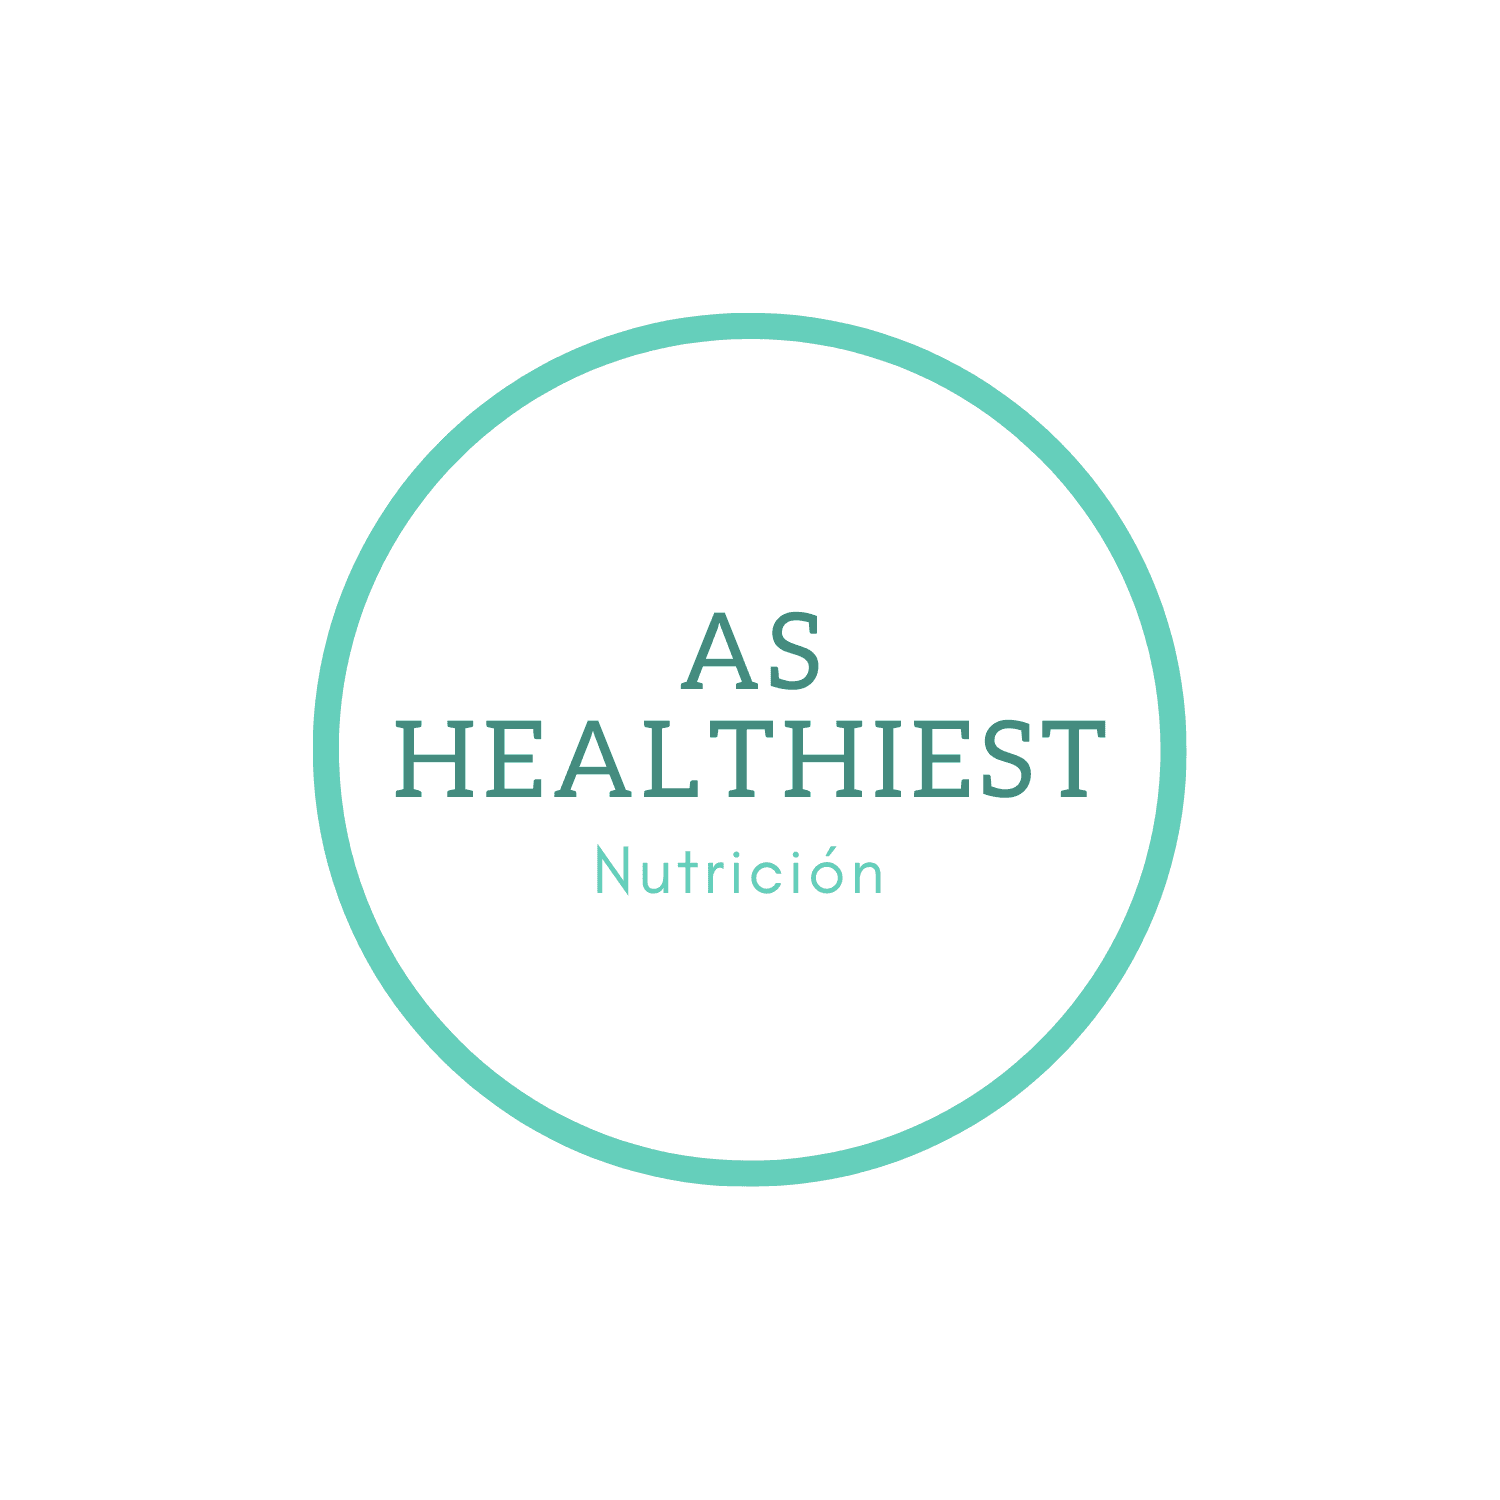 As Healthiest